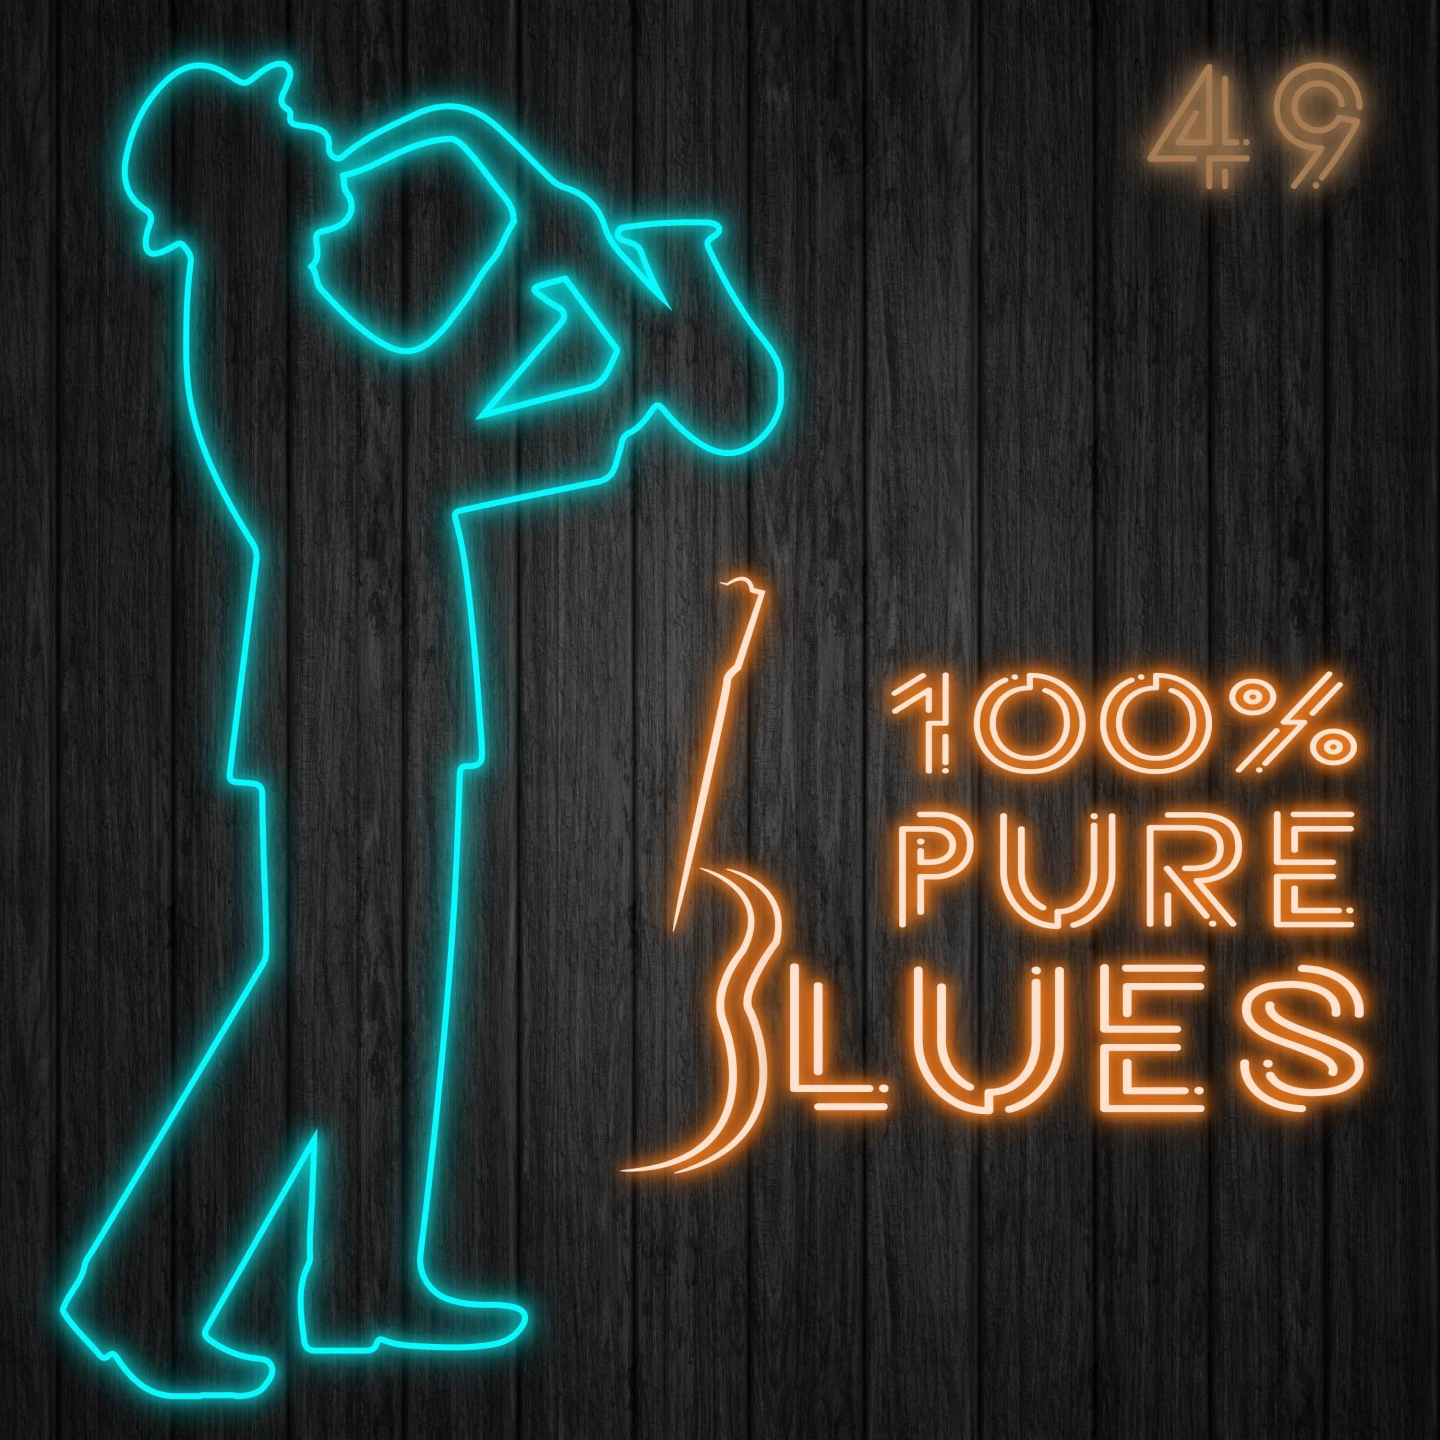 100% Pure Blues / 49